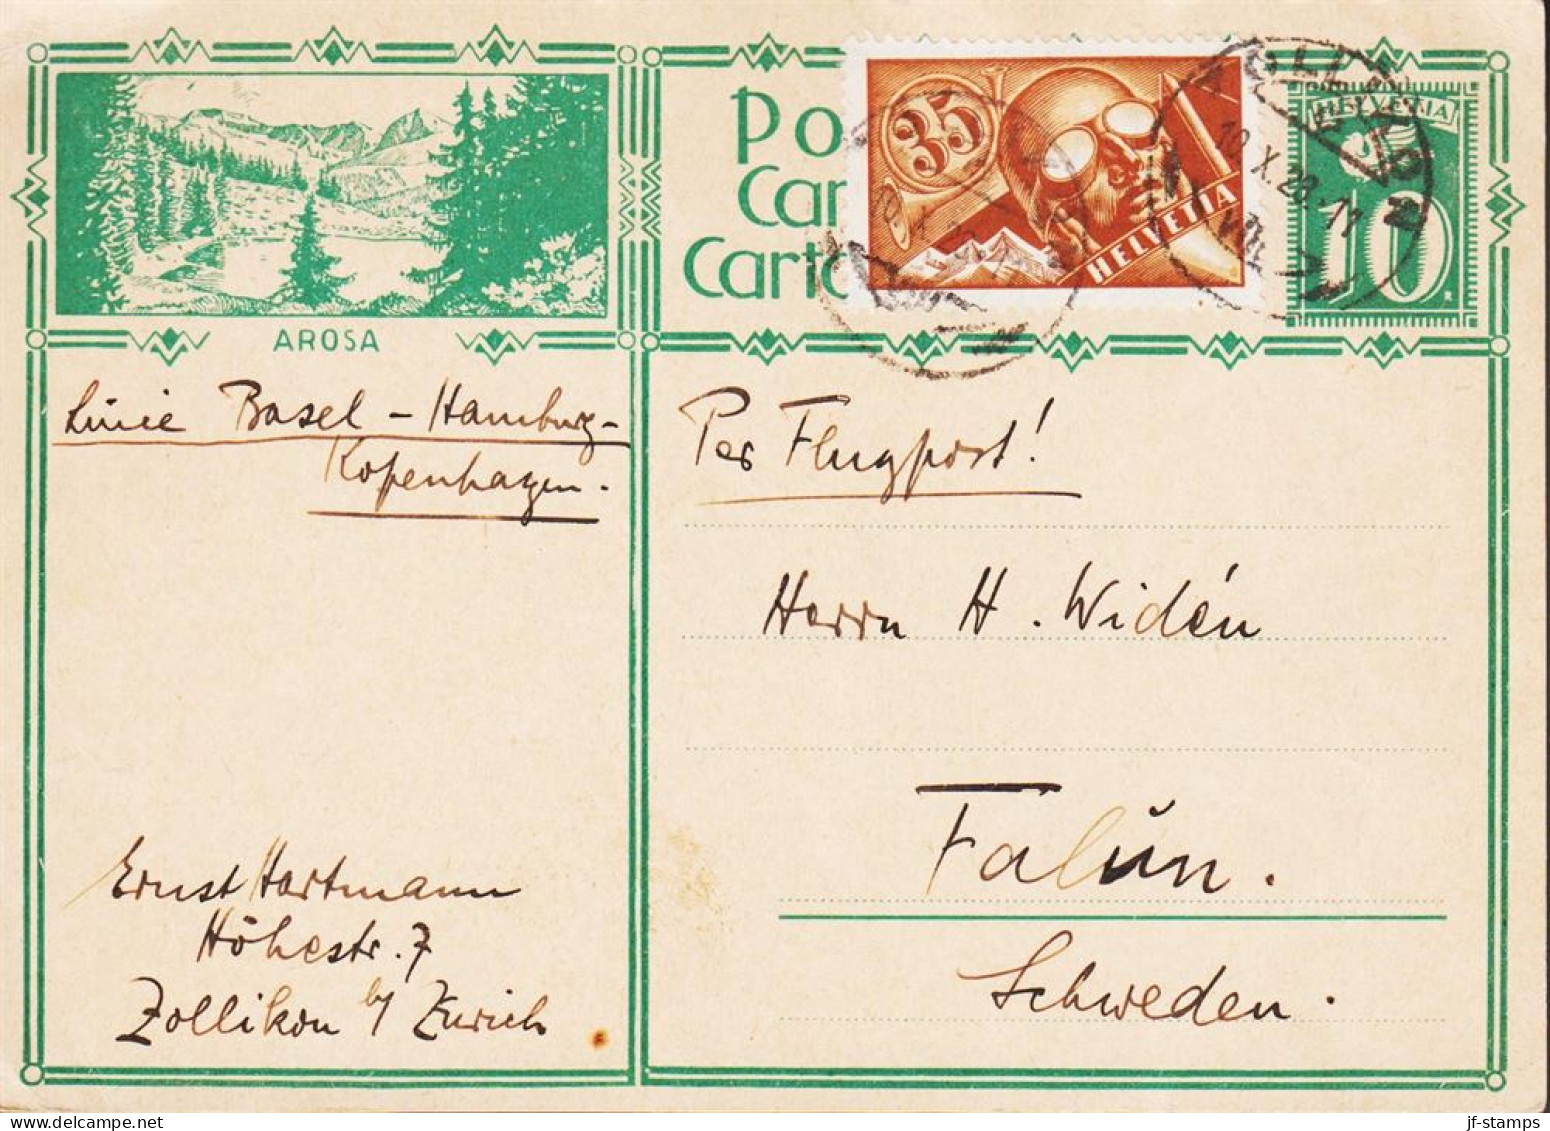 1928. SCHWEIZ  HELVETIA. Fine 10 C Postcard Landscape AROSA With Additional 35 C. FLUGPOST P... (Michel 181+) - JF545723 - Primi Voli